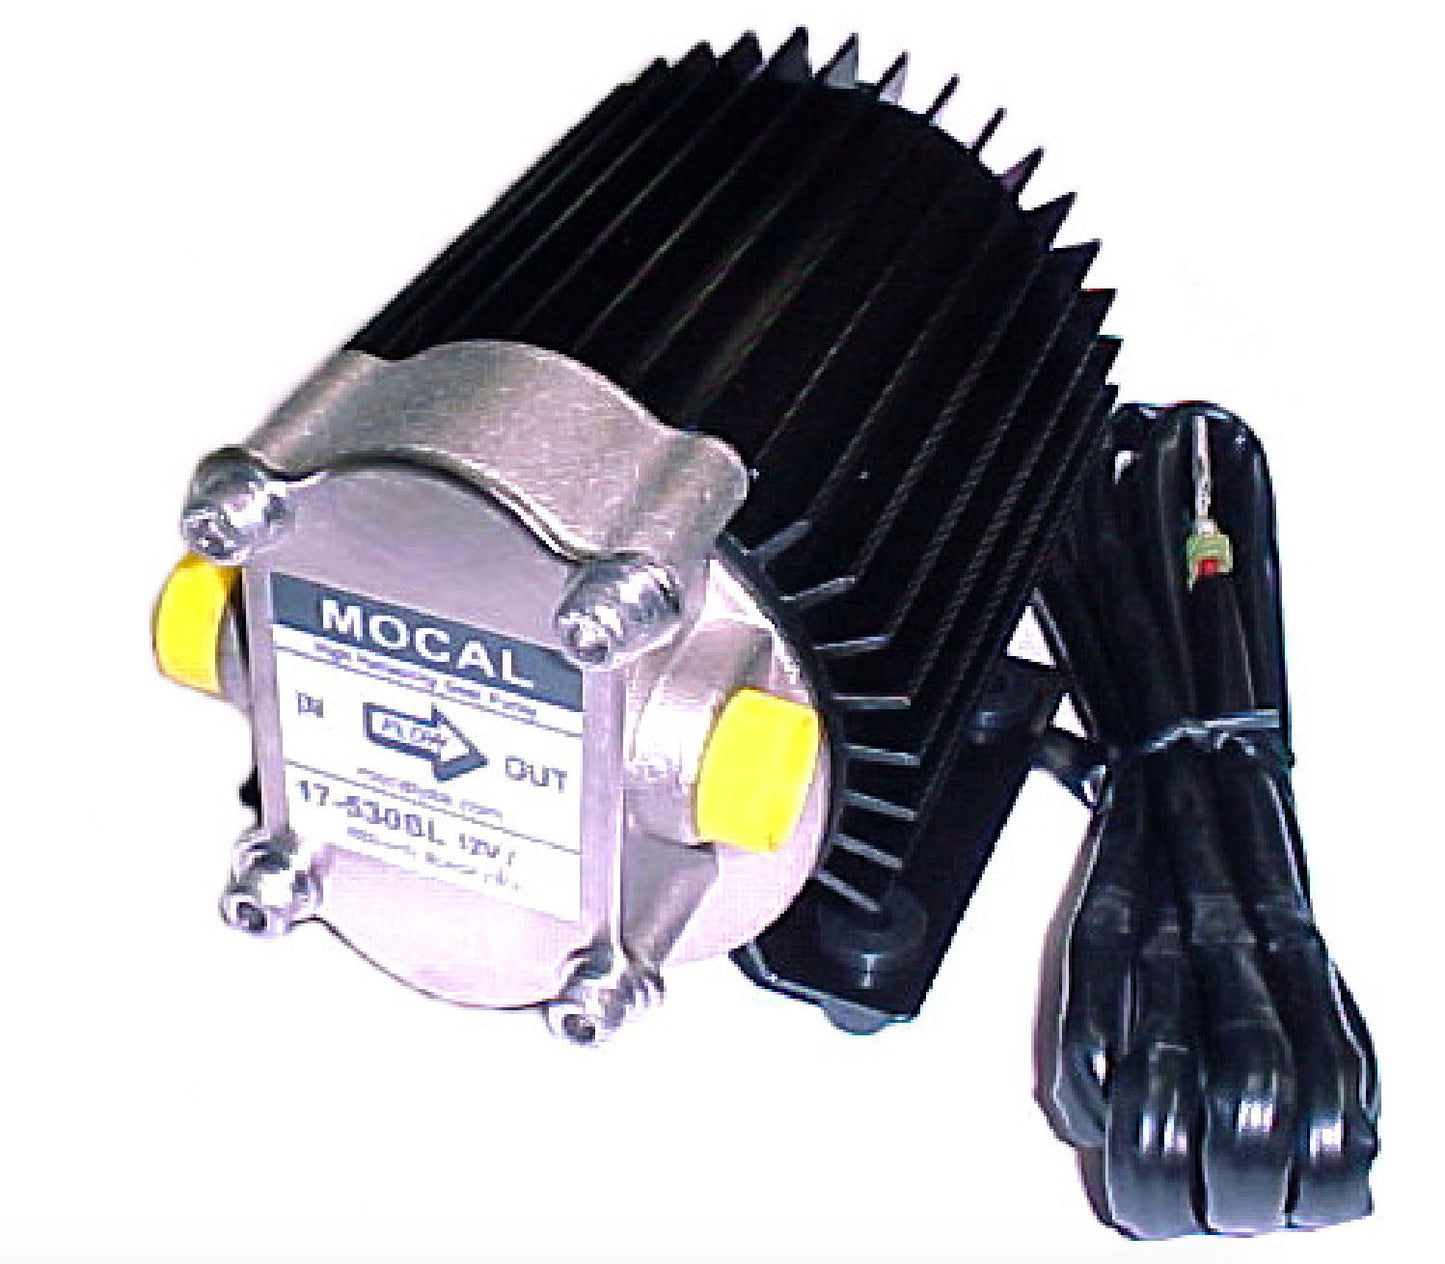 Mocal - Heavy Duty Oil Scavenge / Circulation Pump (17-530SL)